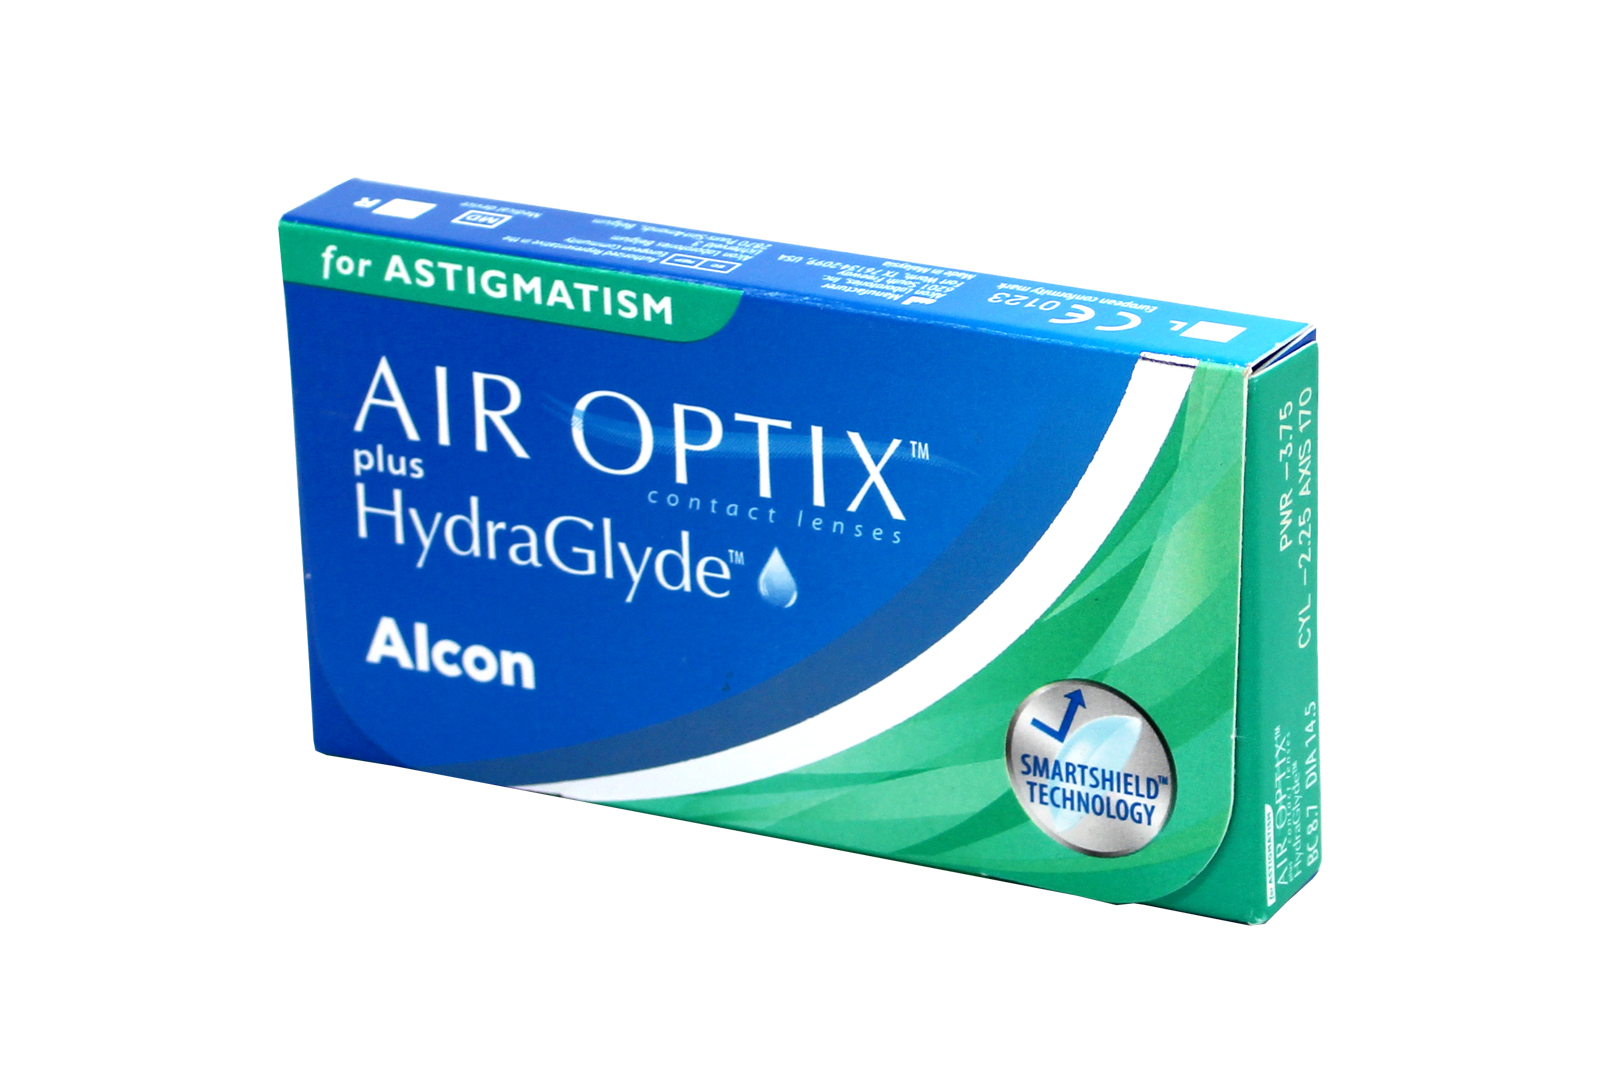 AirOptix Hydraglyde Astigmatismo | Rotter y Krauss image number 0